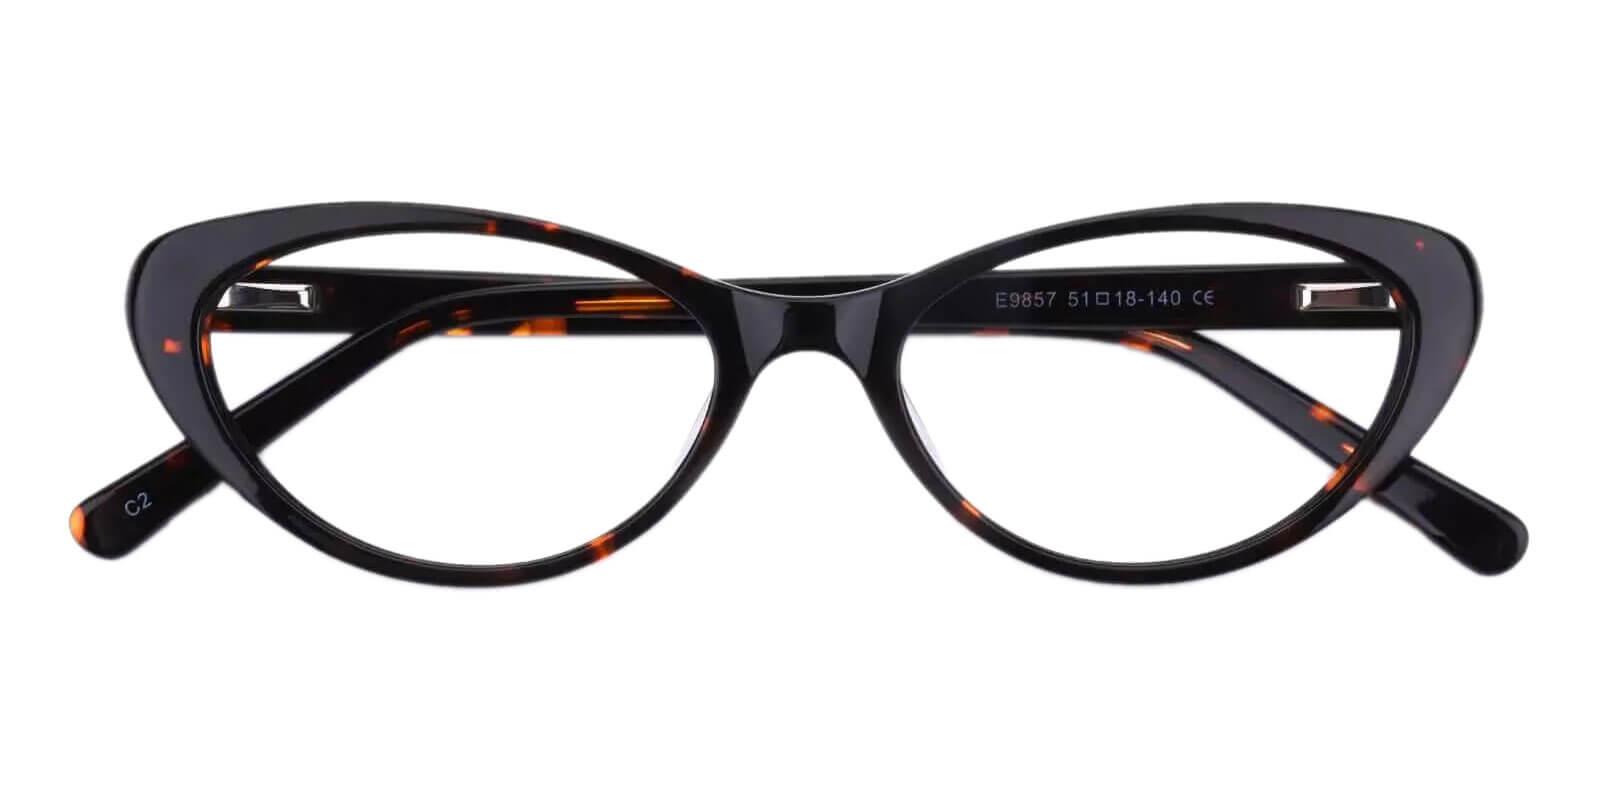 Elena Leopard Acetate Eyeglasses , UniversalBridgeFit Frames from ABBE Glasses